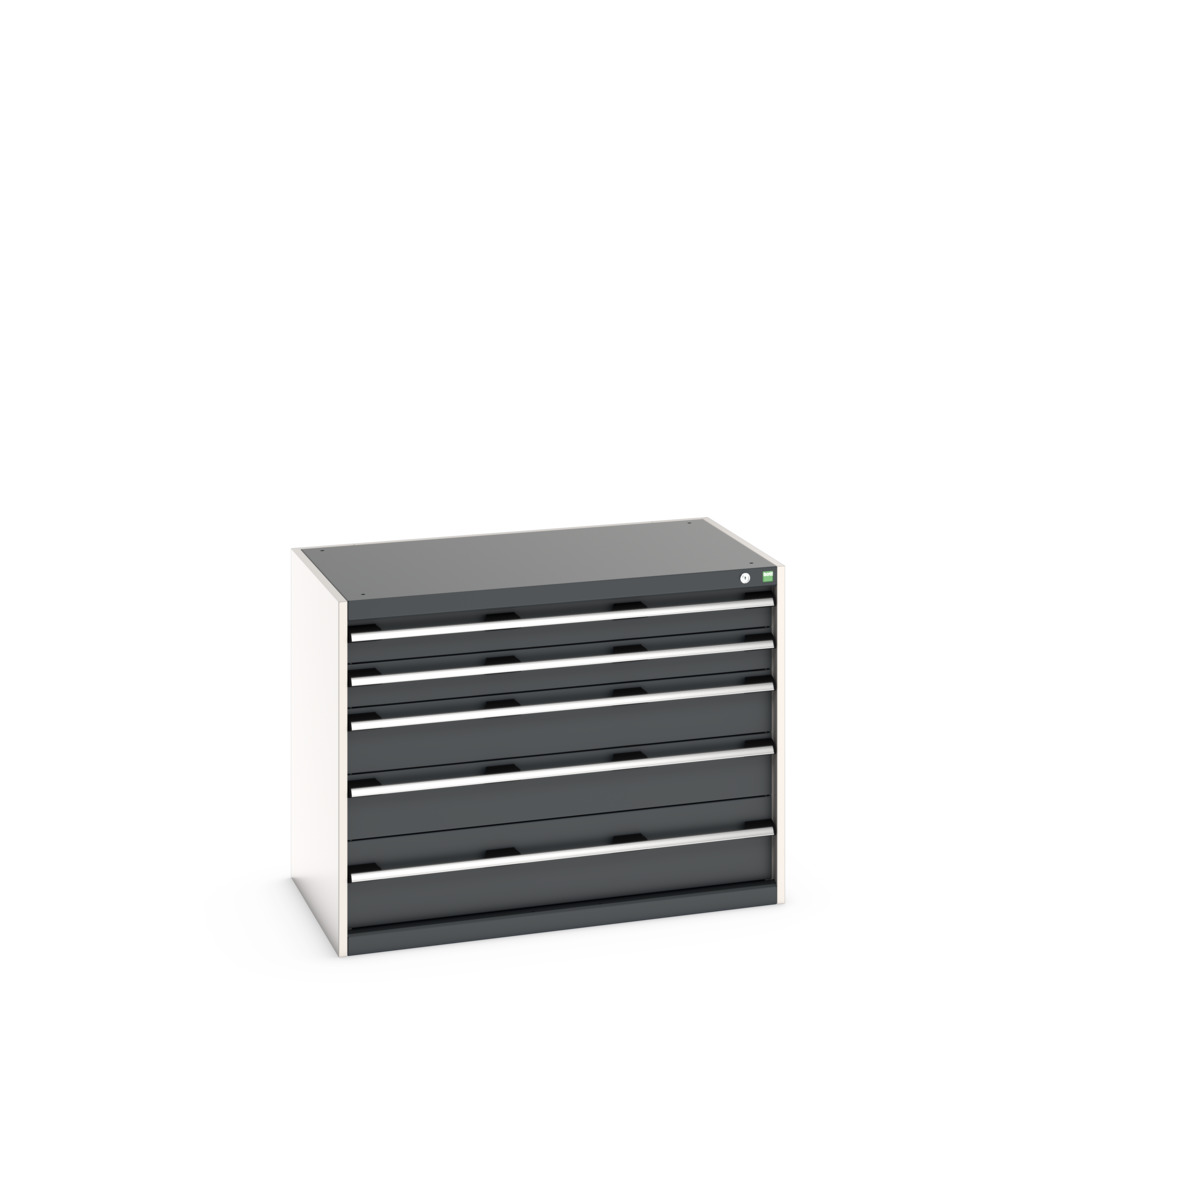 40021010. - cubio drawer cabinet